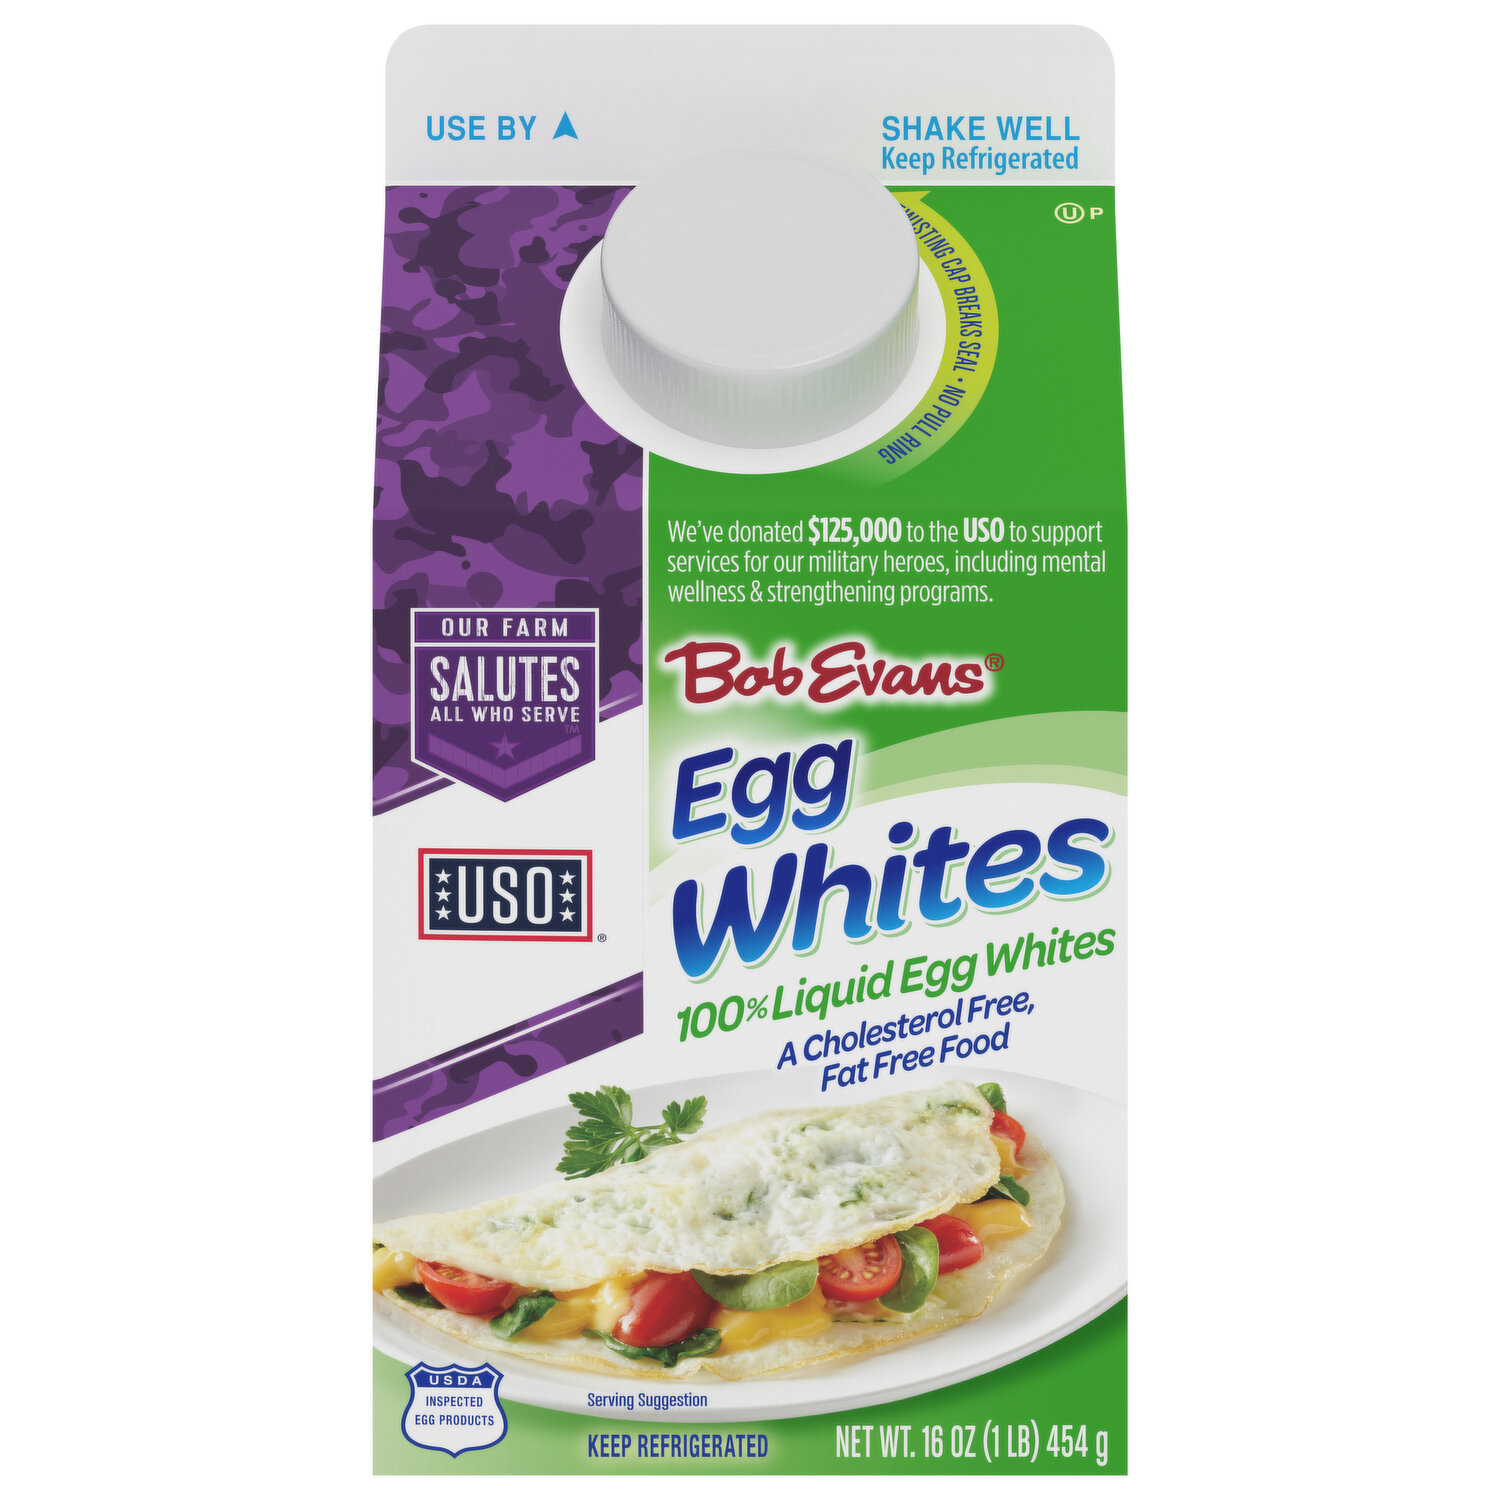 Egg Beaters Southwestern Style - Egg Beaters